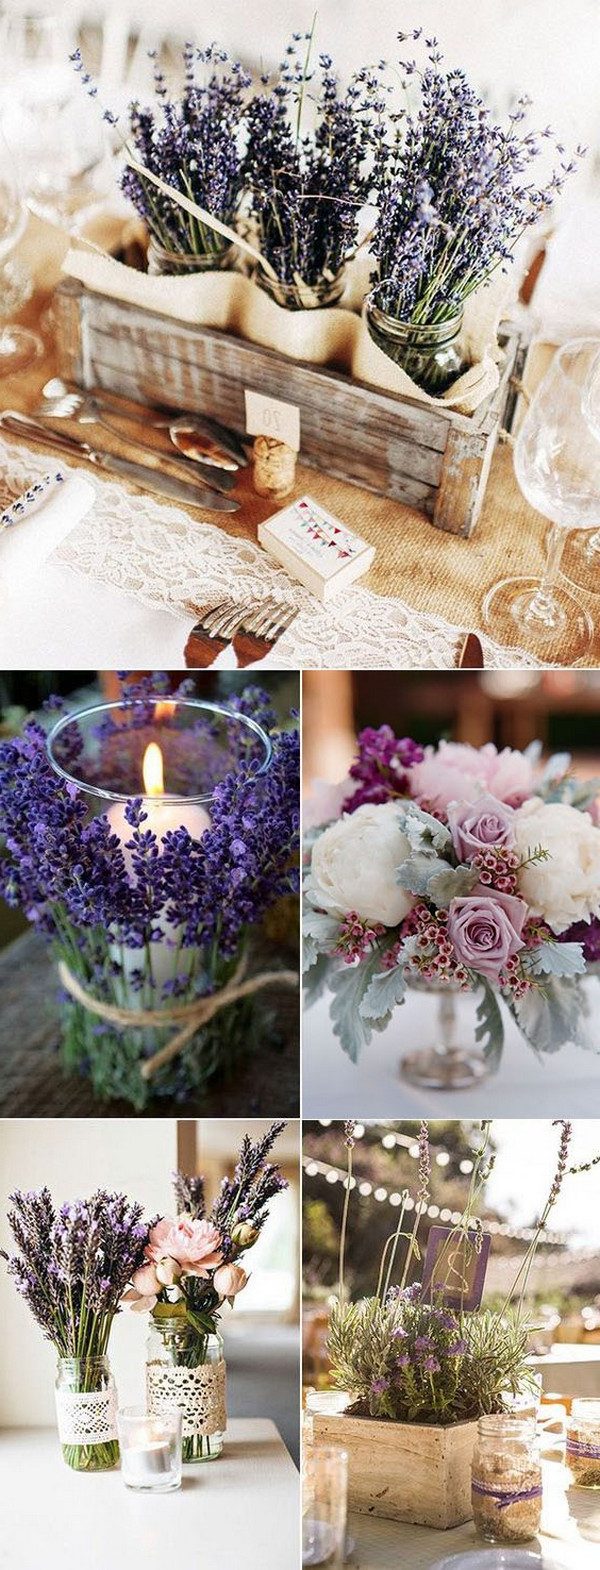 Purple rustic centerpieces glass bottle and purple flowers 2019 wedding decor trends